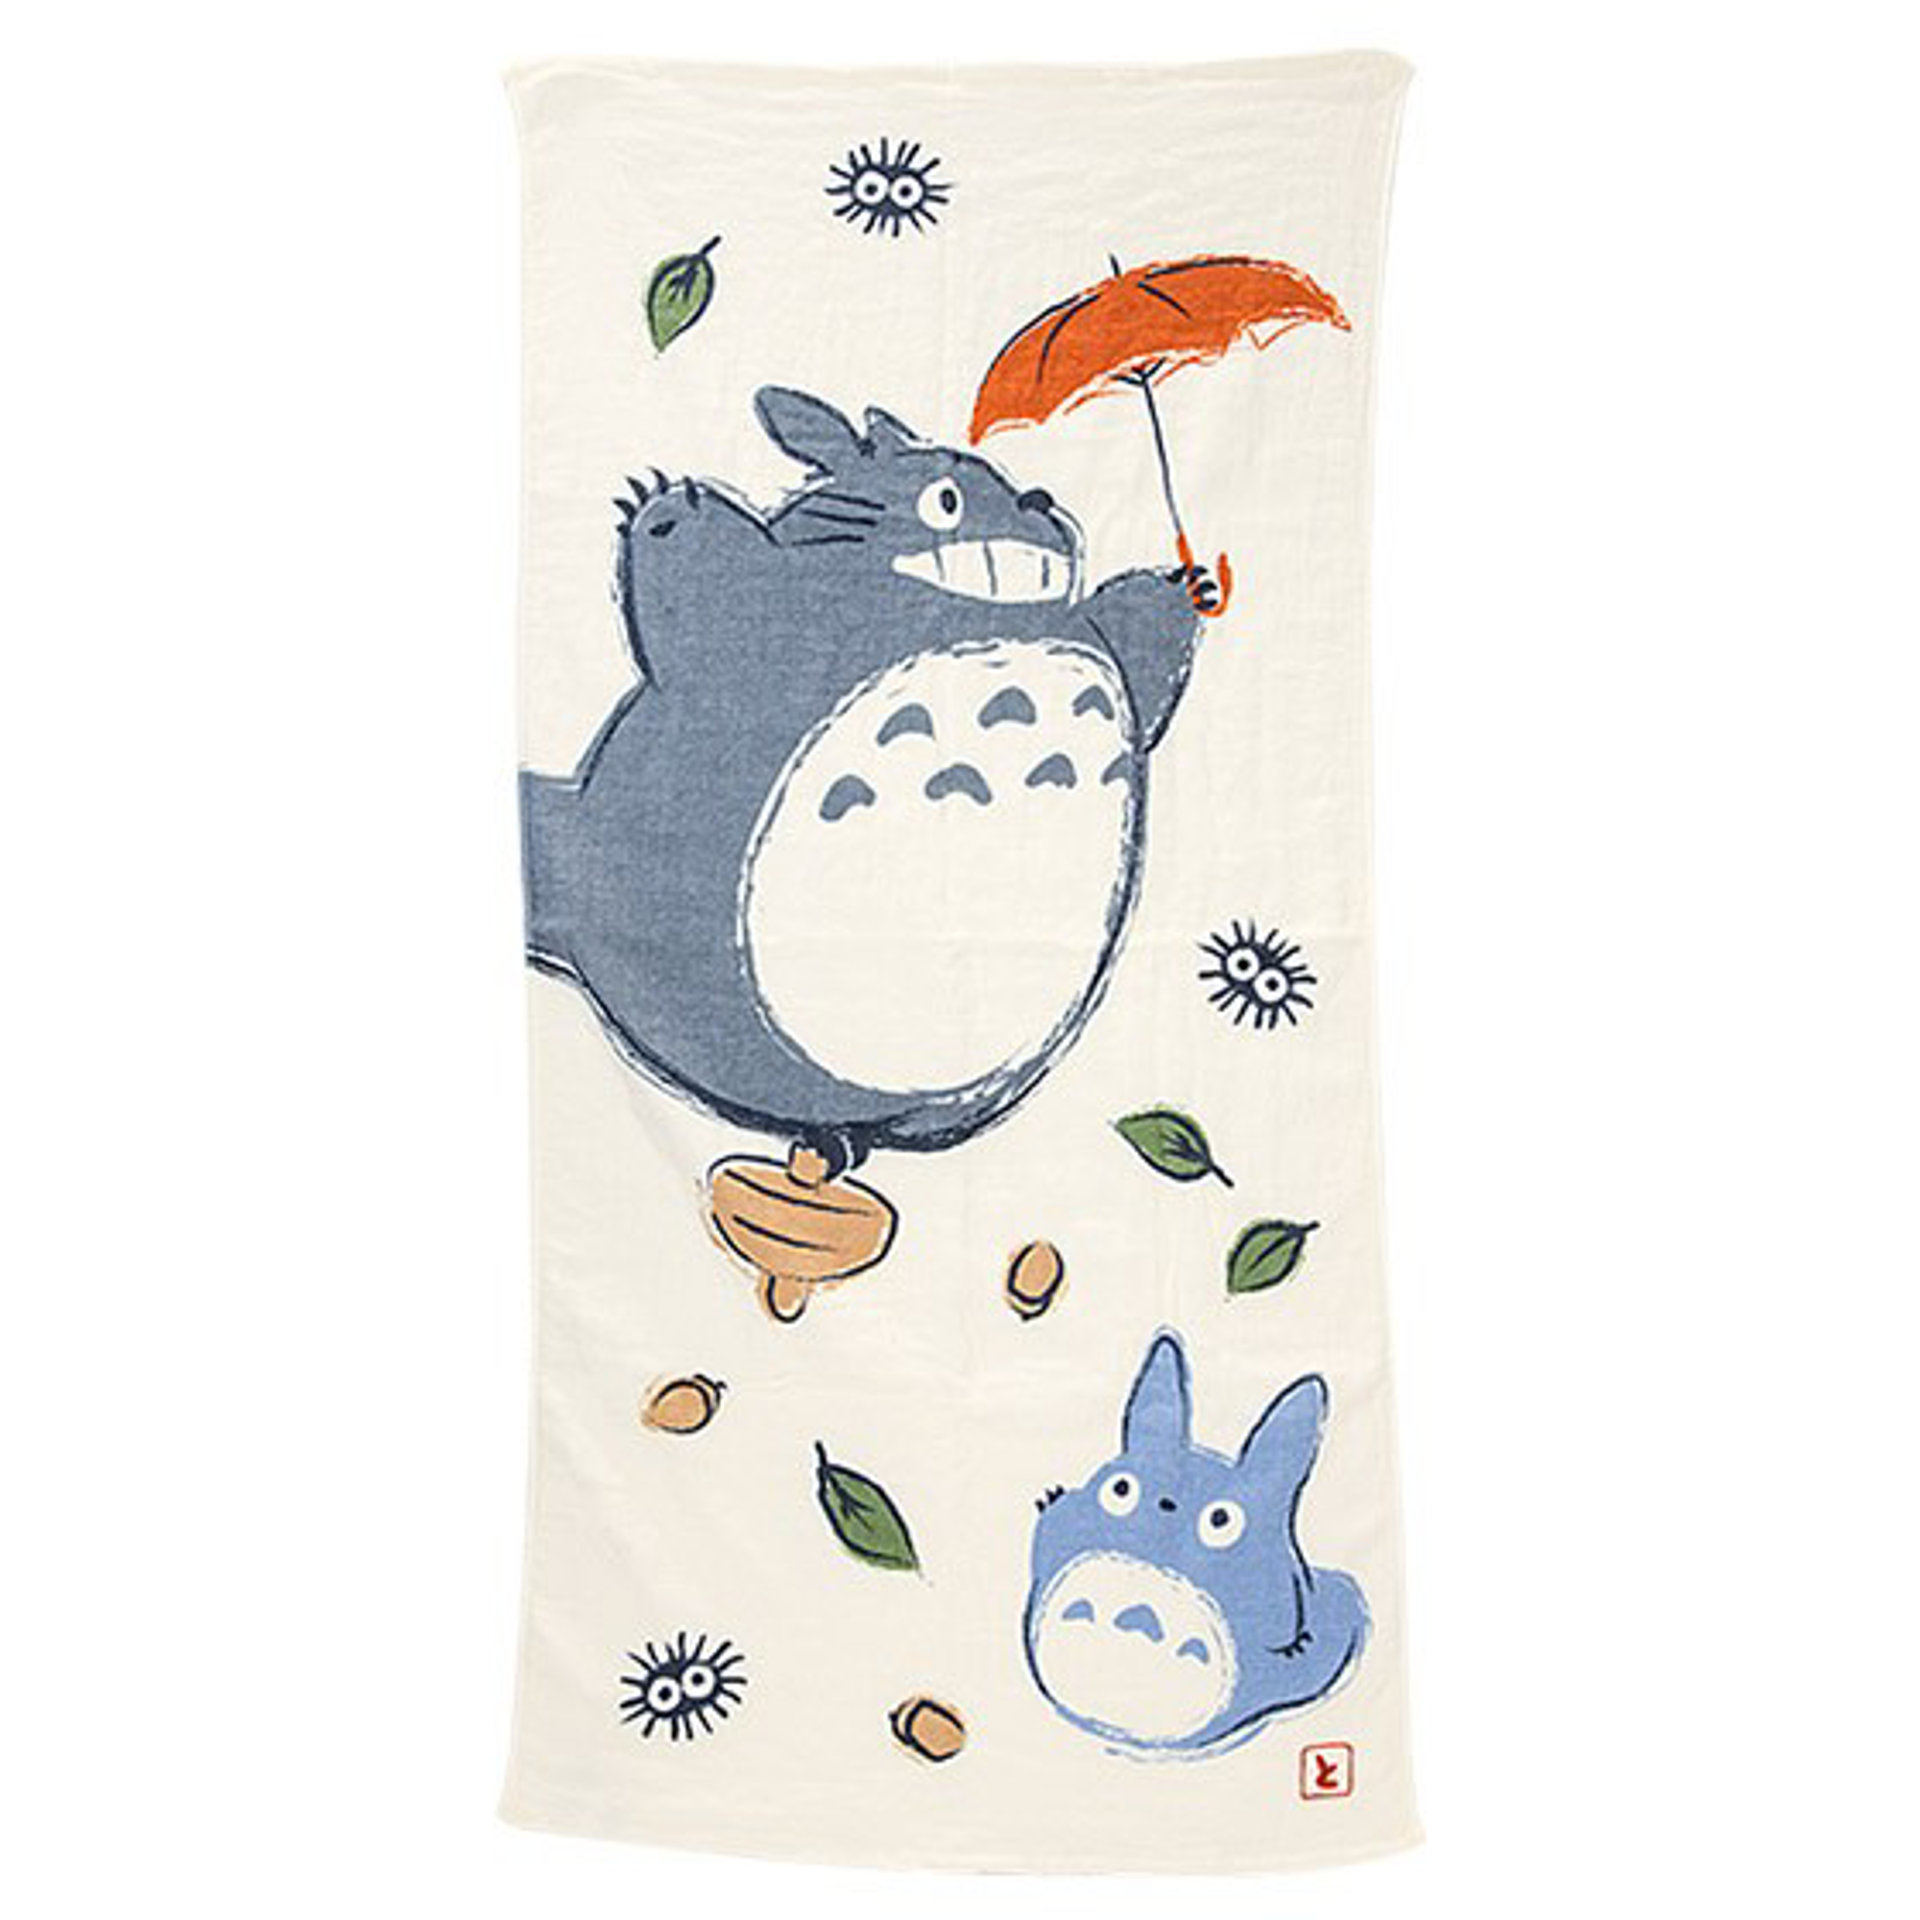 Ghibli - Mon voisin Totoro - Grande serviette de bain Danse Donkoko 60x120cm